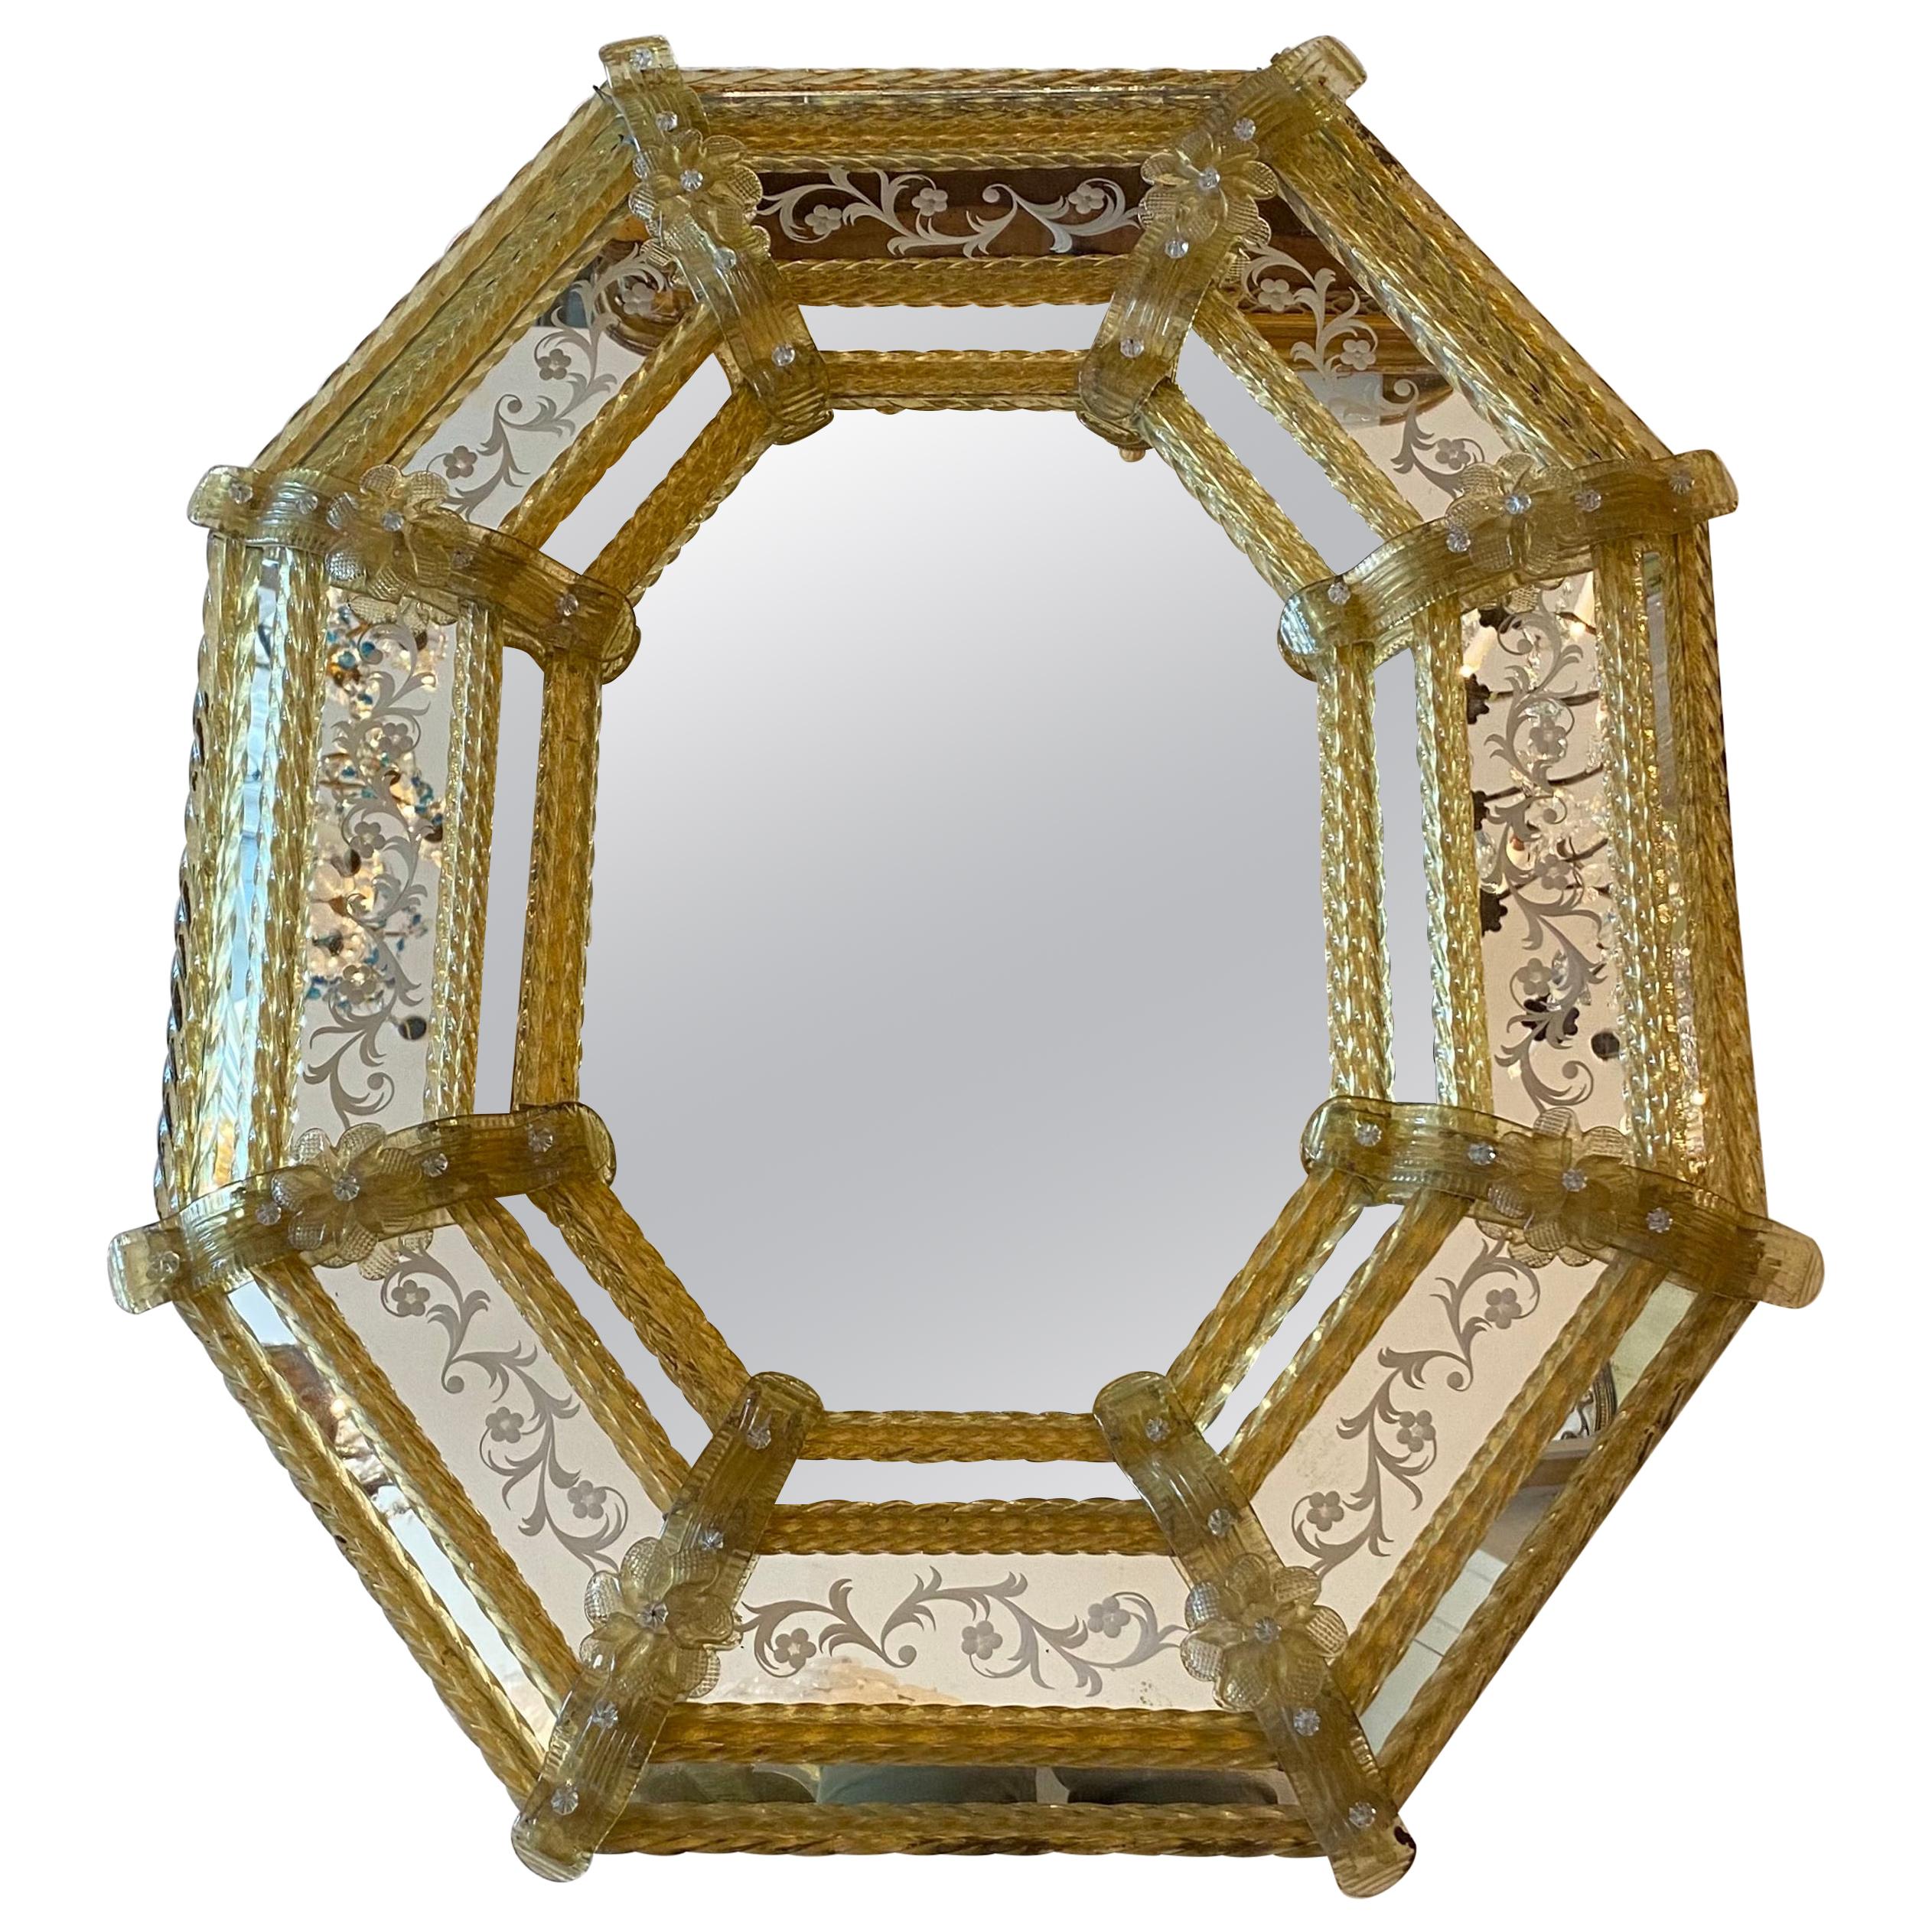 Ovaler venezianischer Spiegel